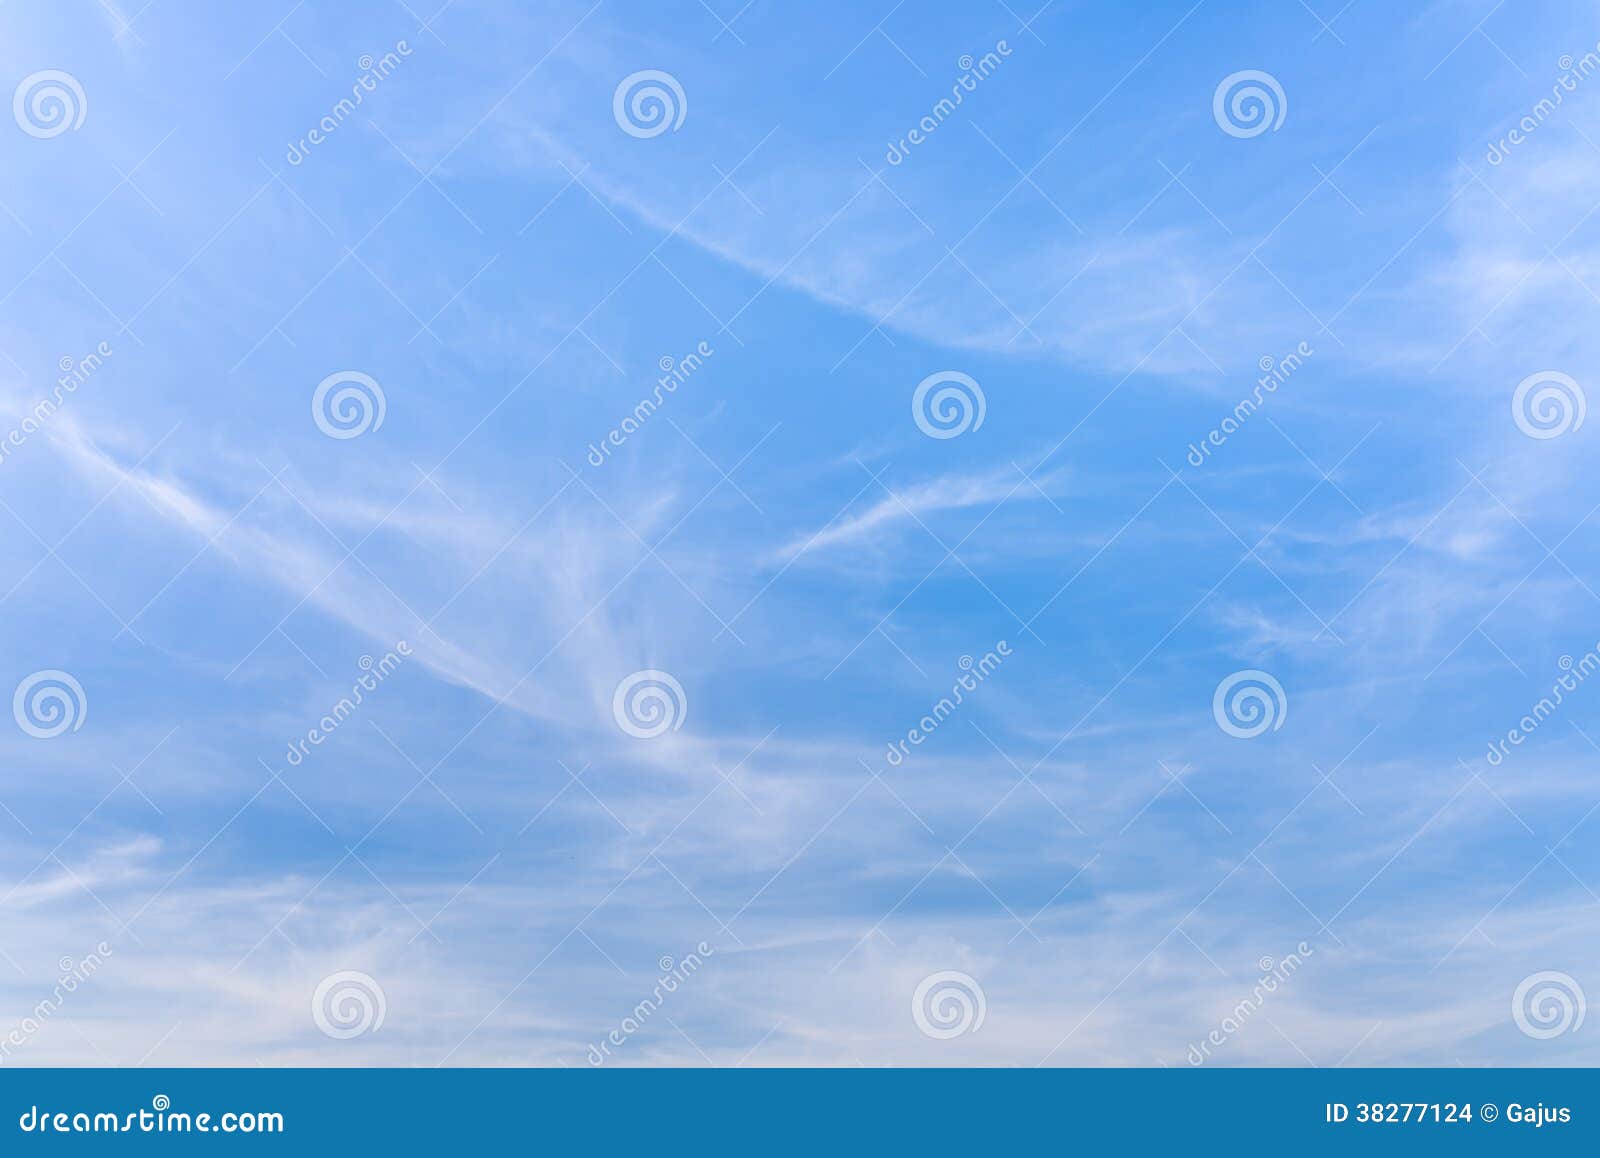 hazy blue summer sky background